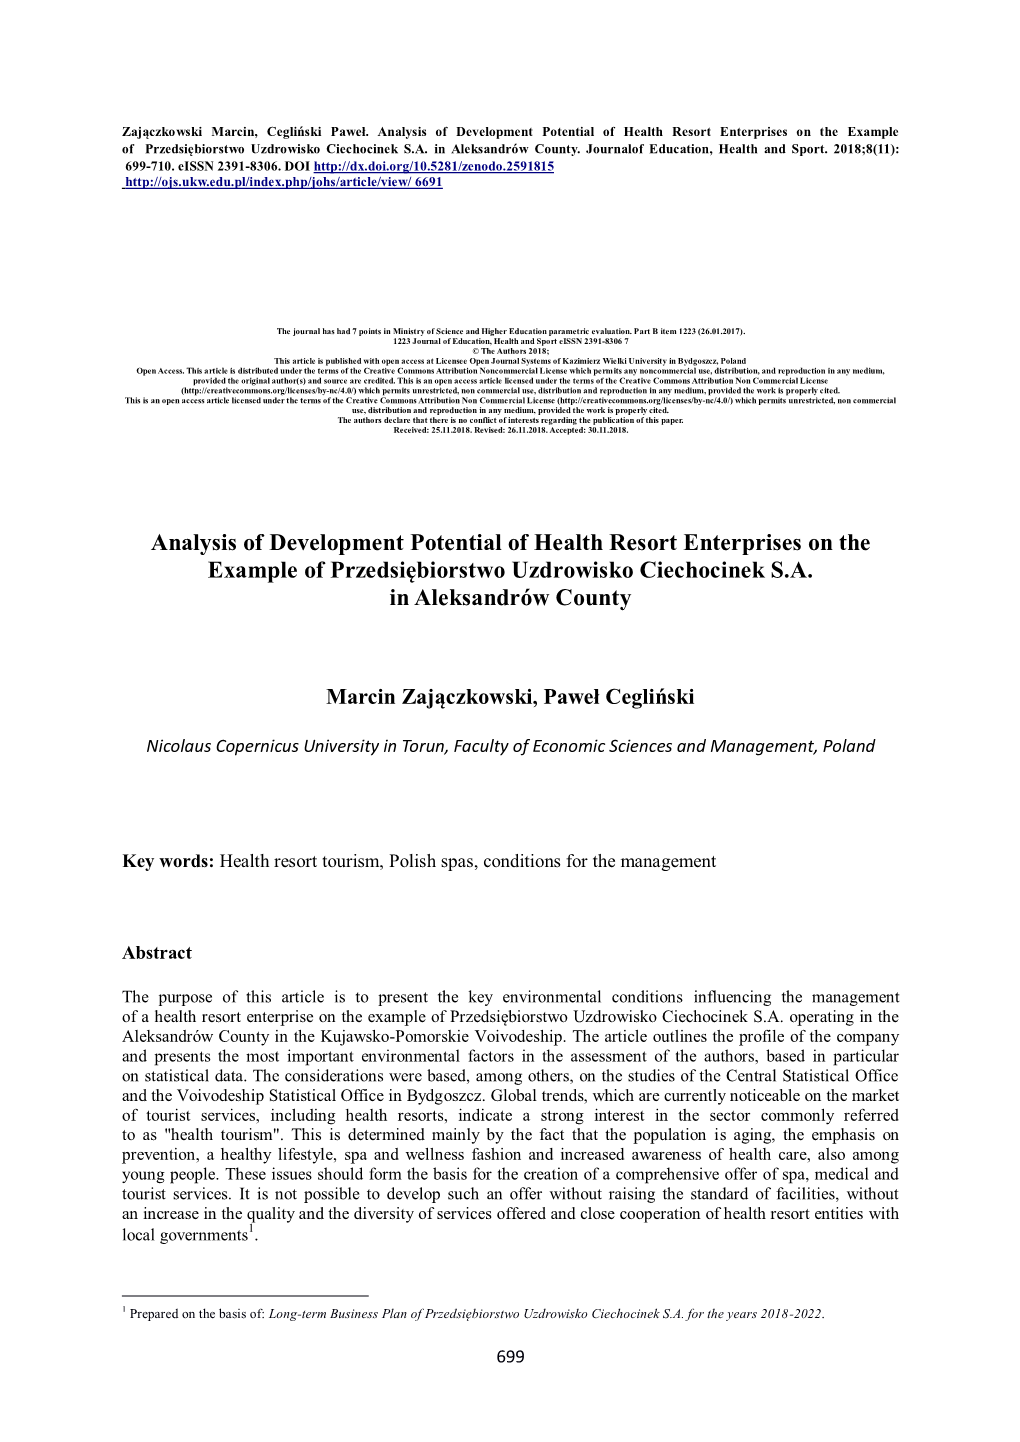 Analysis of Development Potential of Health Resort Enterprises on the Example of Przedsiębiorstwo Uzdrowisko Ciechocinek S.A